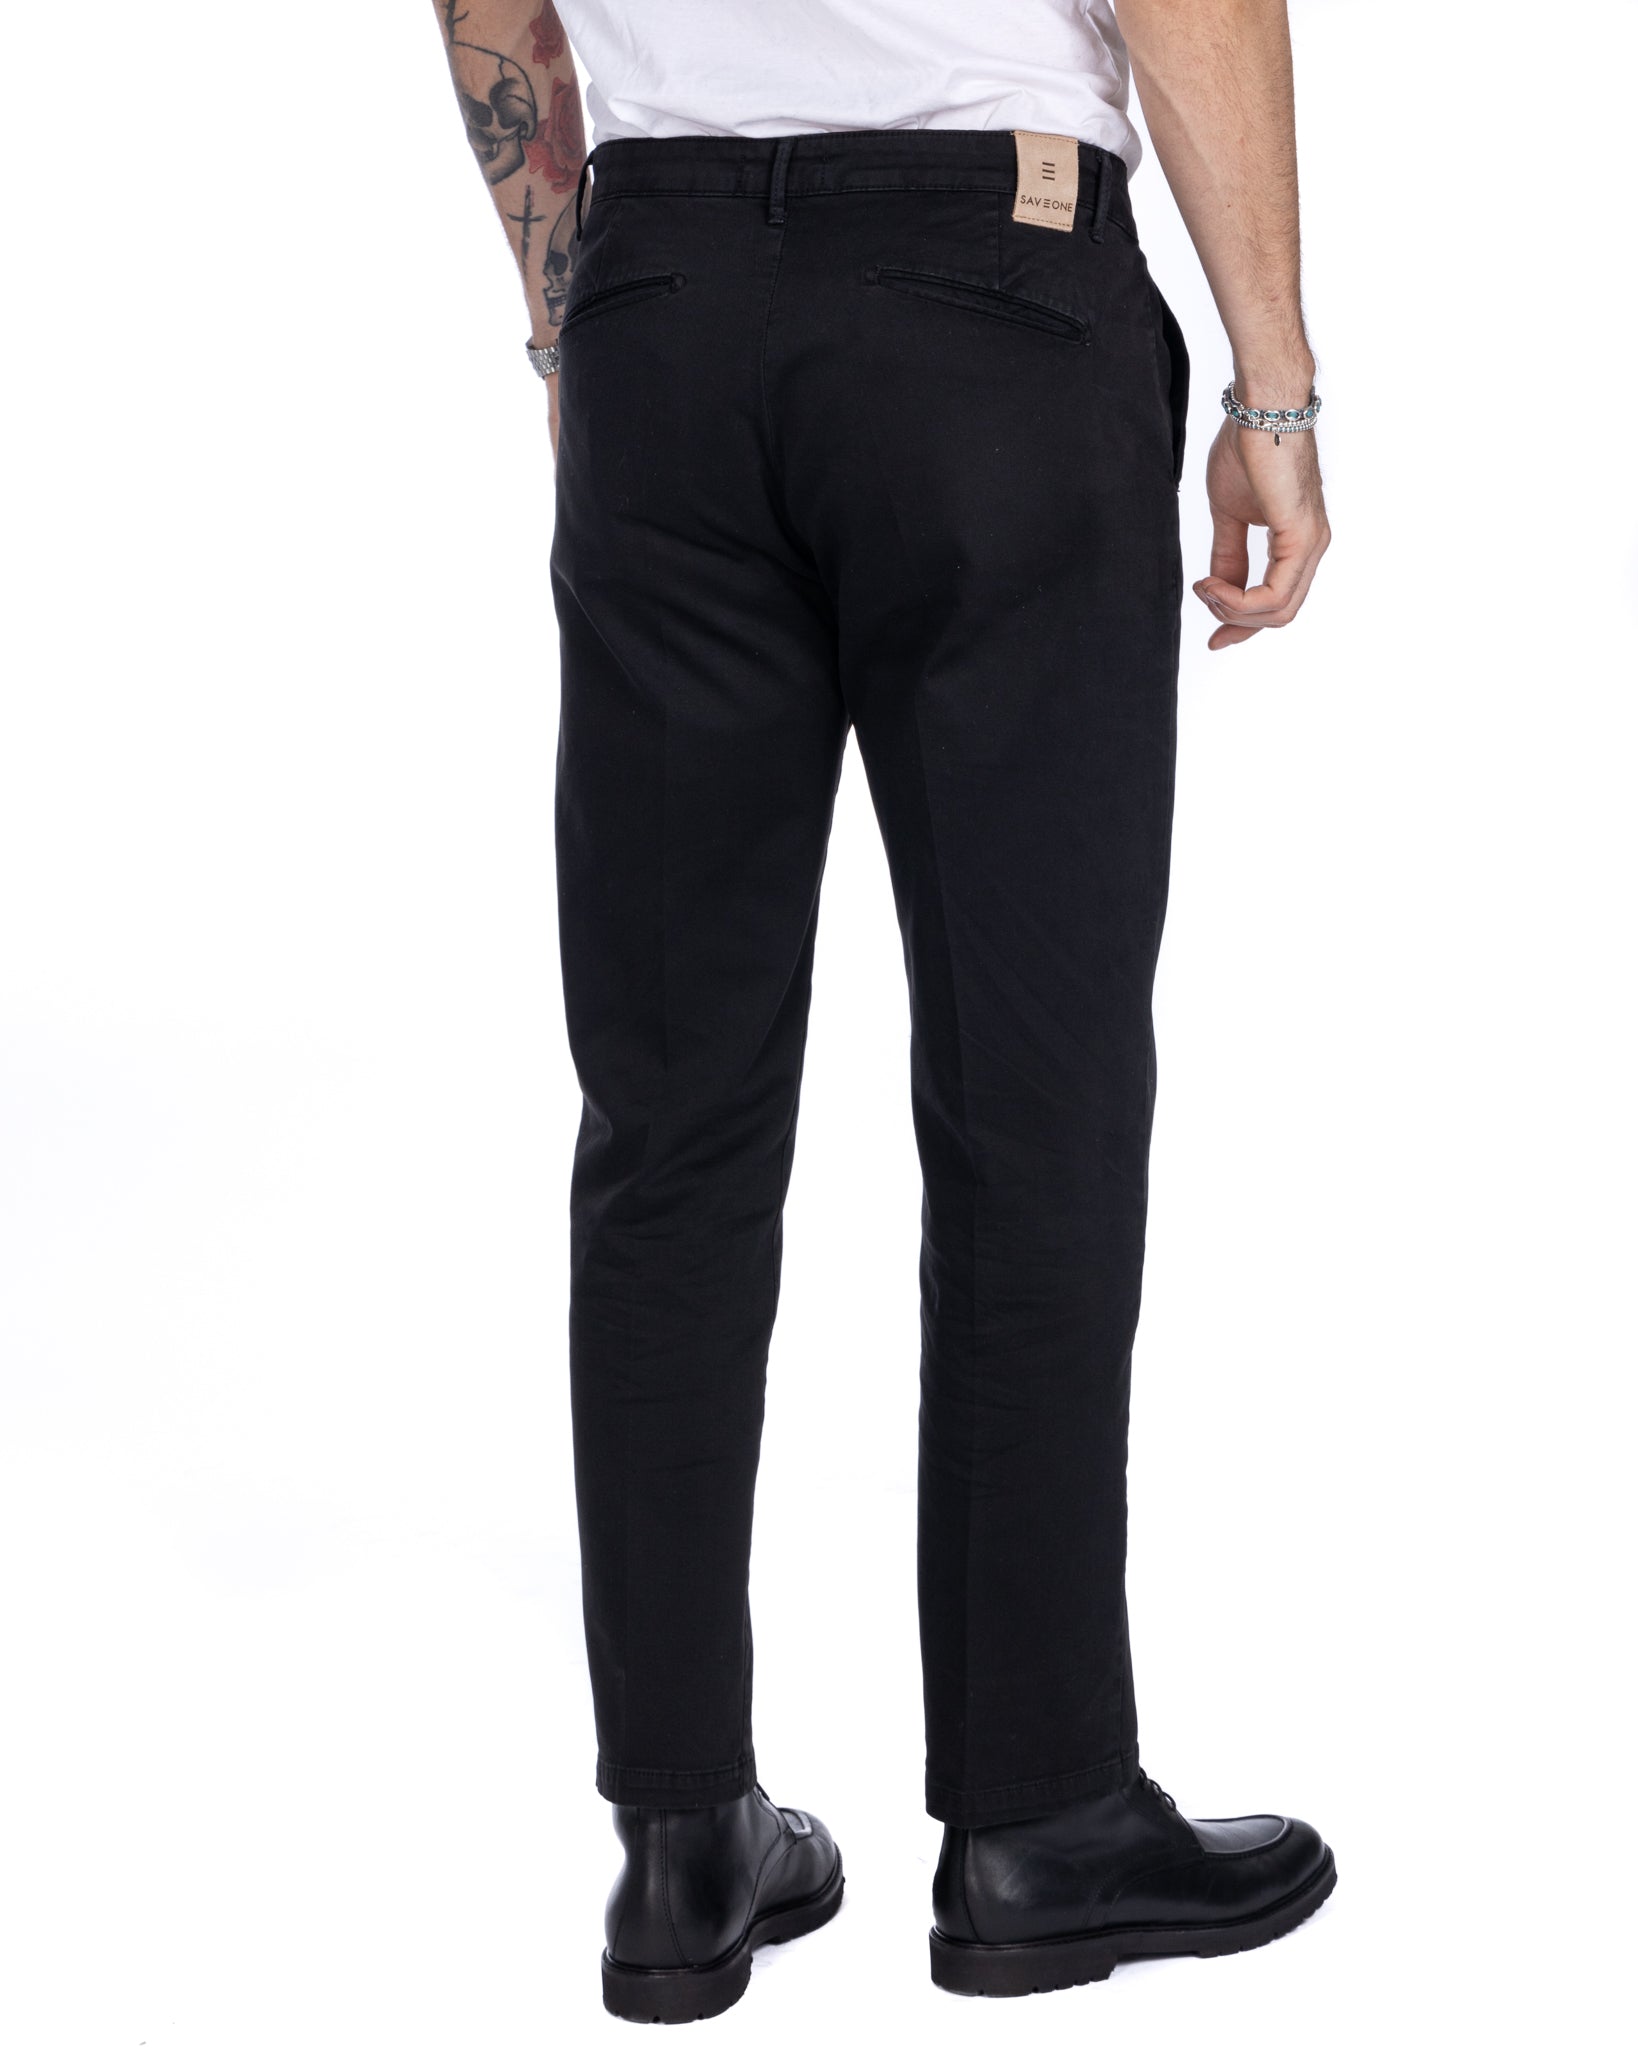 Sorrento - black wide leg trousers